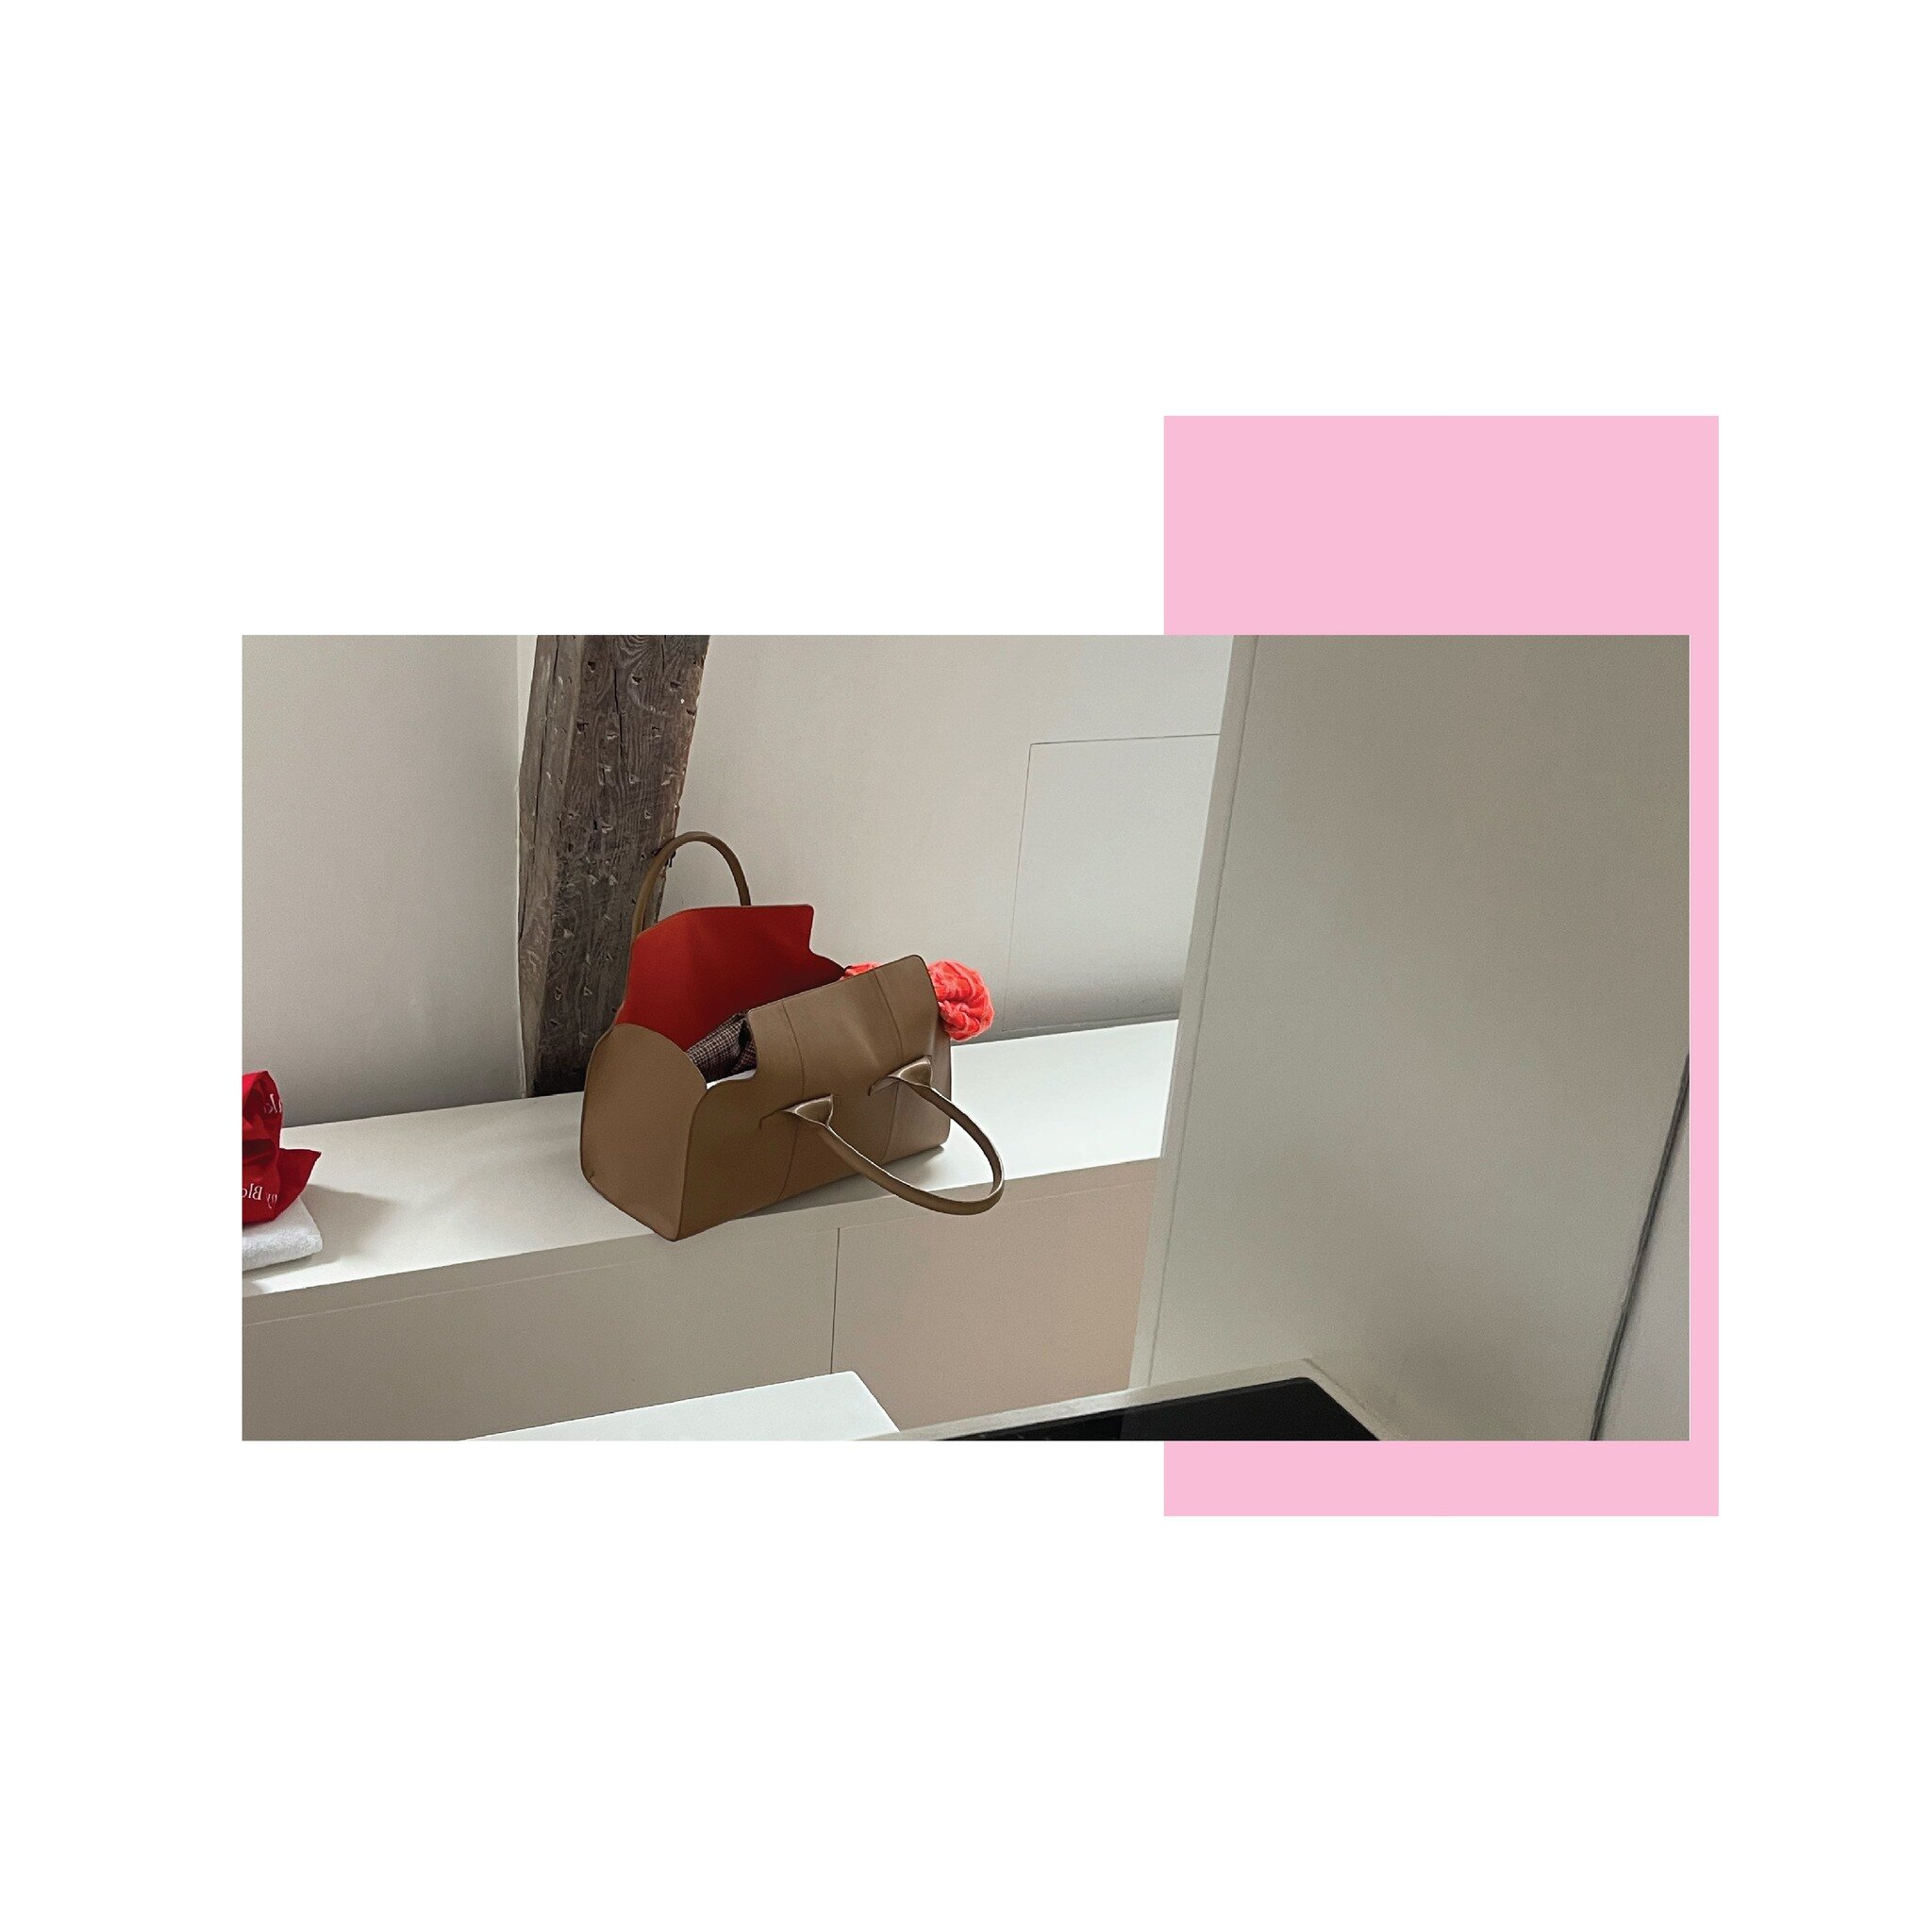 ON THE SHELF ! 
(Coming soon - The Great Escape Bag)

#travel #carryon #weekender #holdall #jetset #holiday #escape #tan #oooohlala #luggage #thegreatescape  #madeinitaly #designedinlondon #designerhandbag #innis #innisbags #bag #fashion #bags #handm